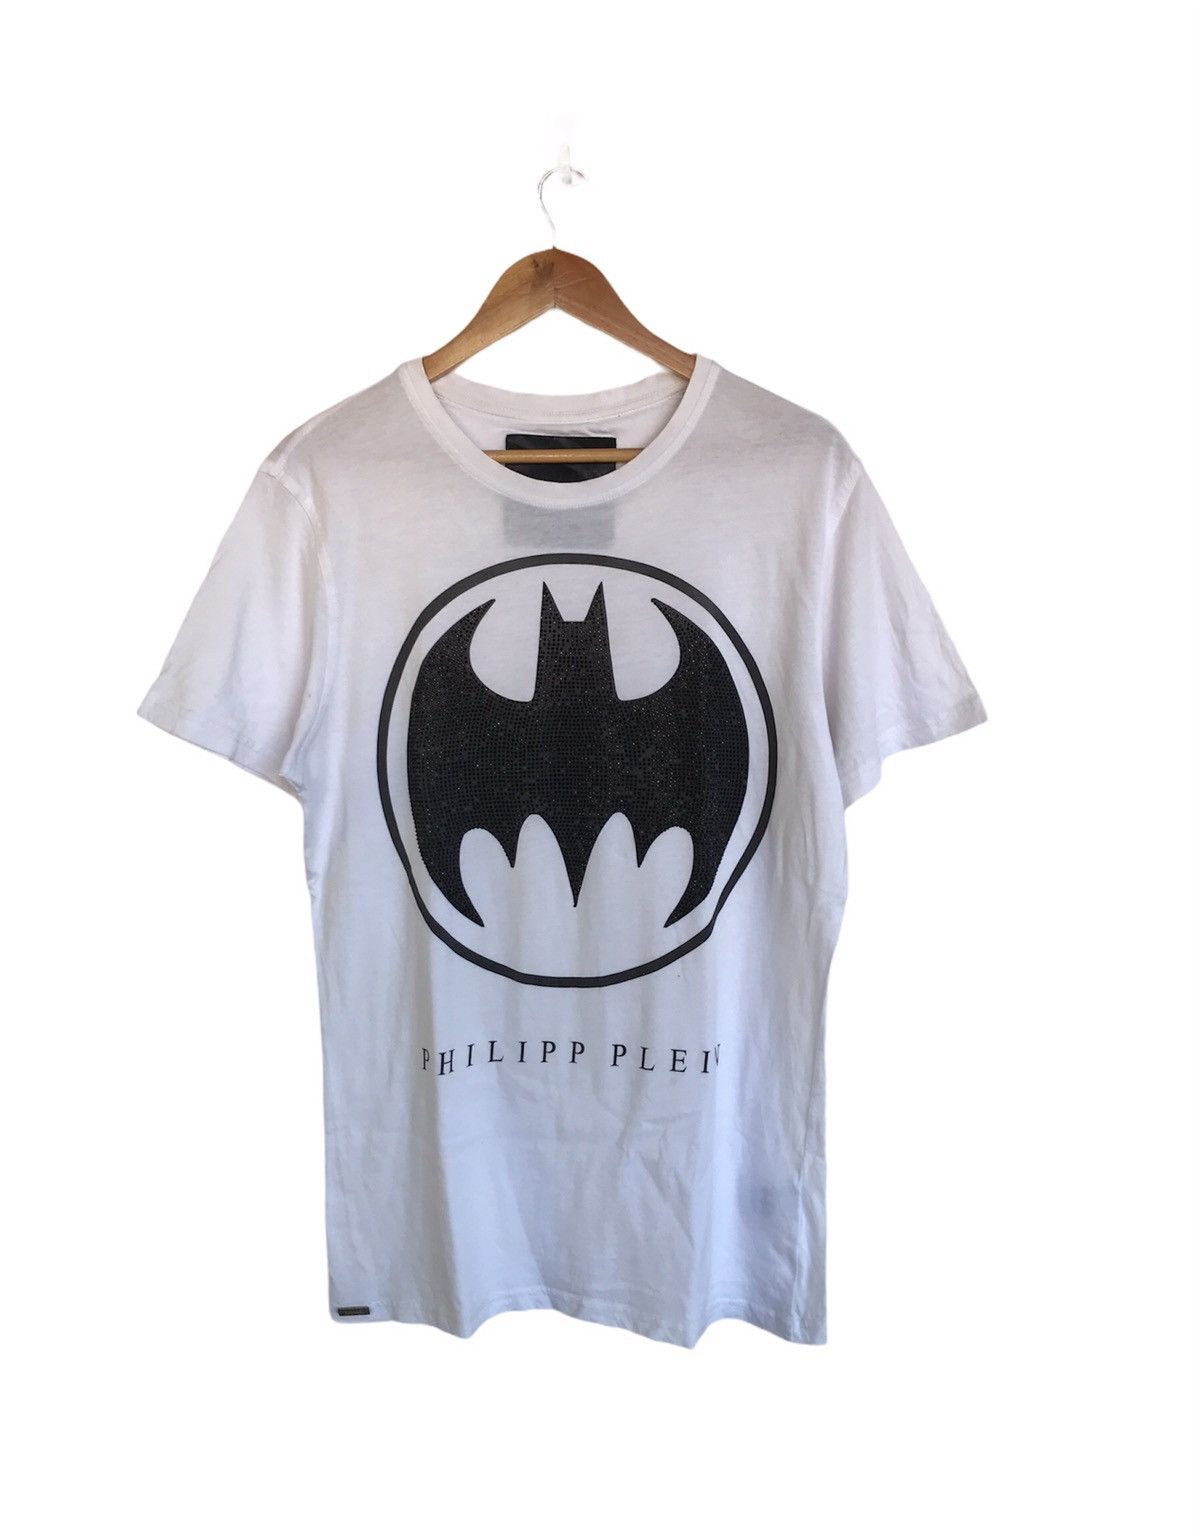 Plein Philip X Batman Swarovski Tshirt |